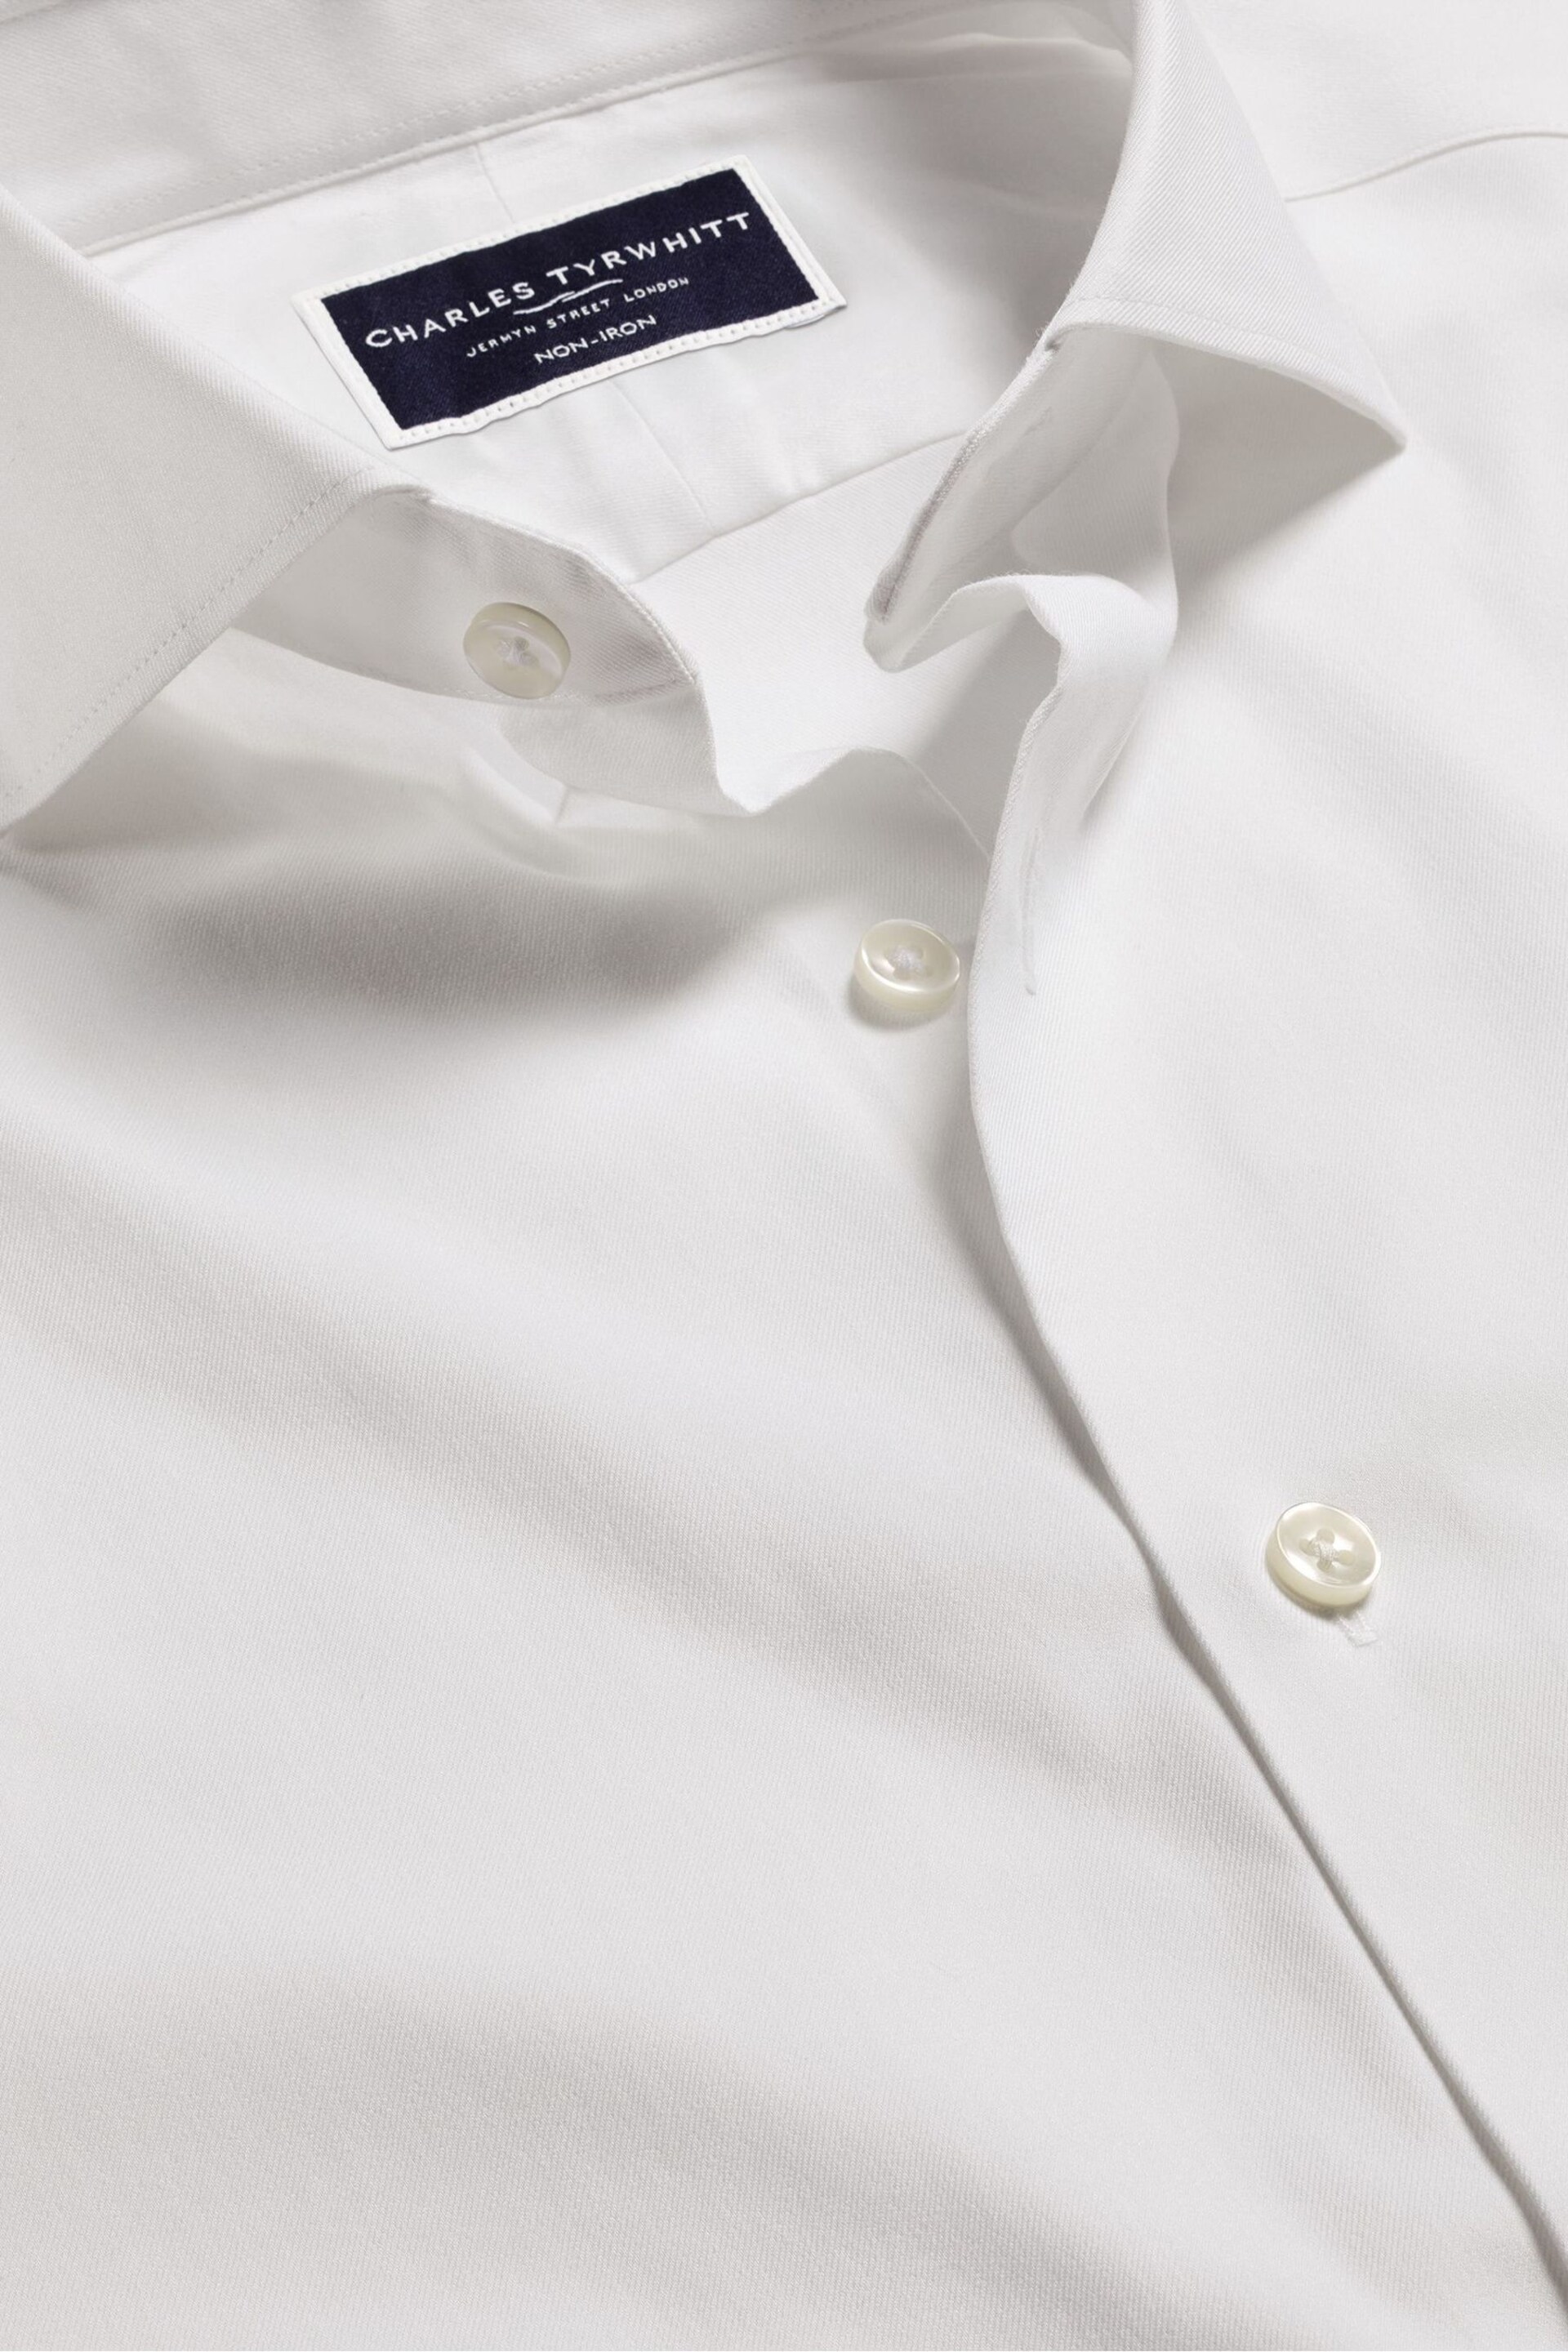 Charles Tyrwhitt White Slim Fit Non-Iron Stretch Twill Shirt - Image 5 of 6